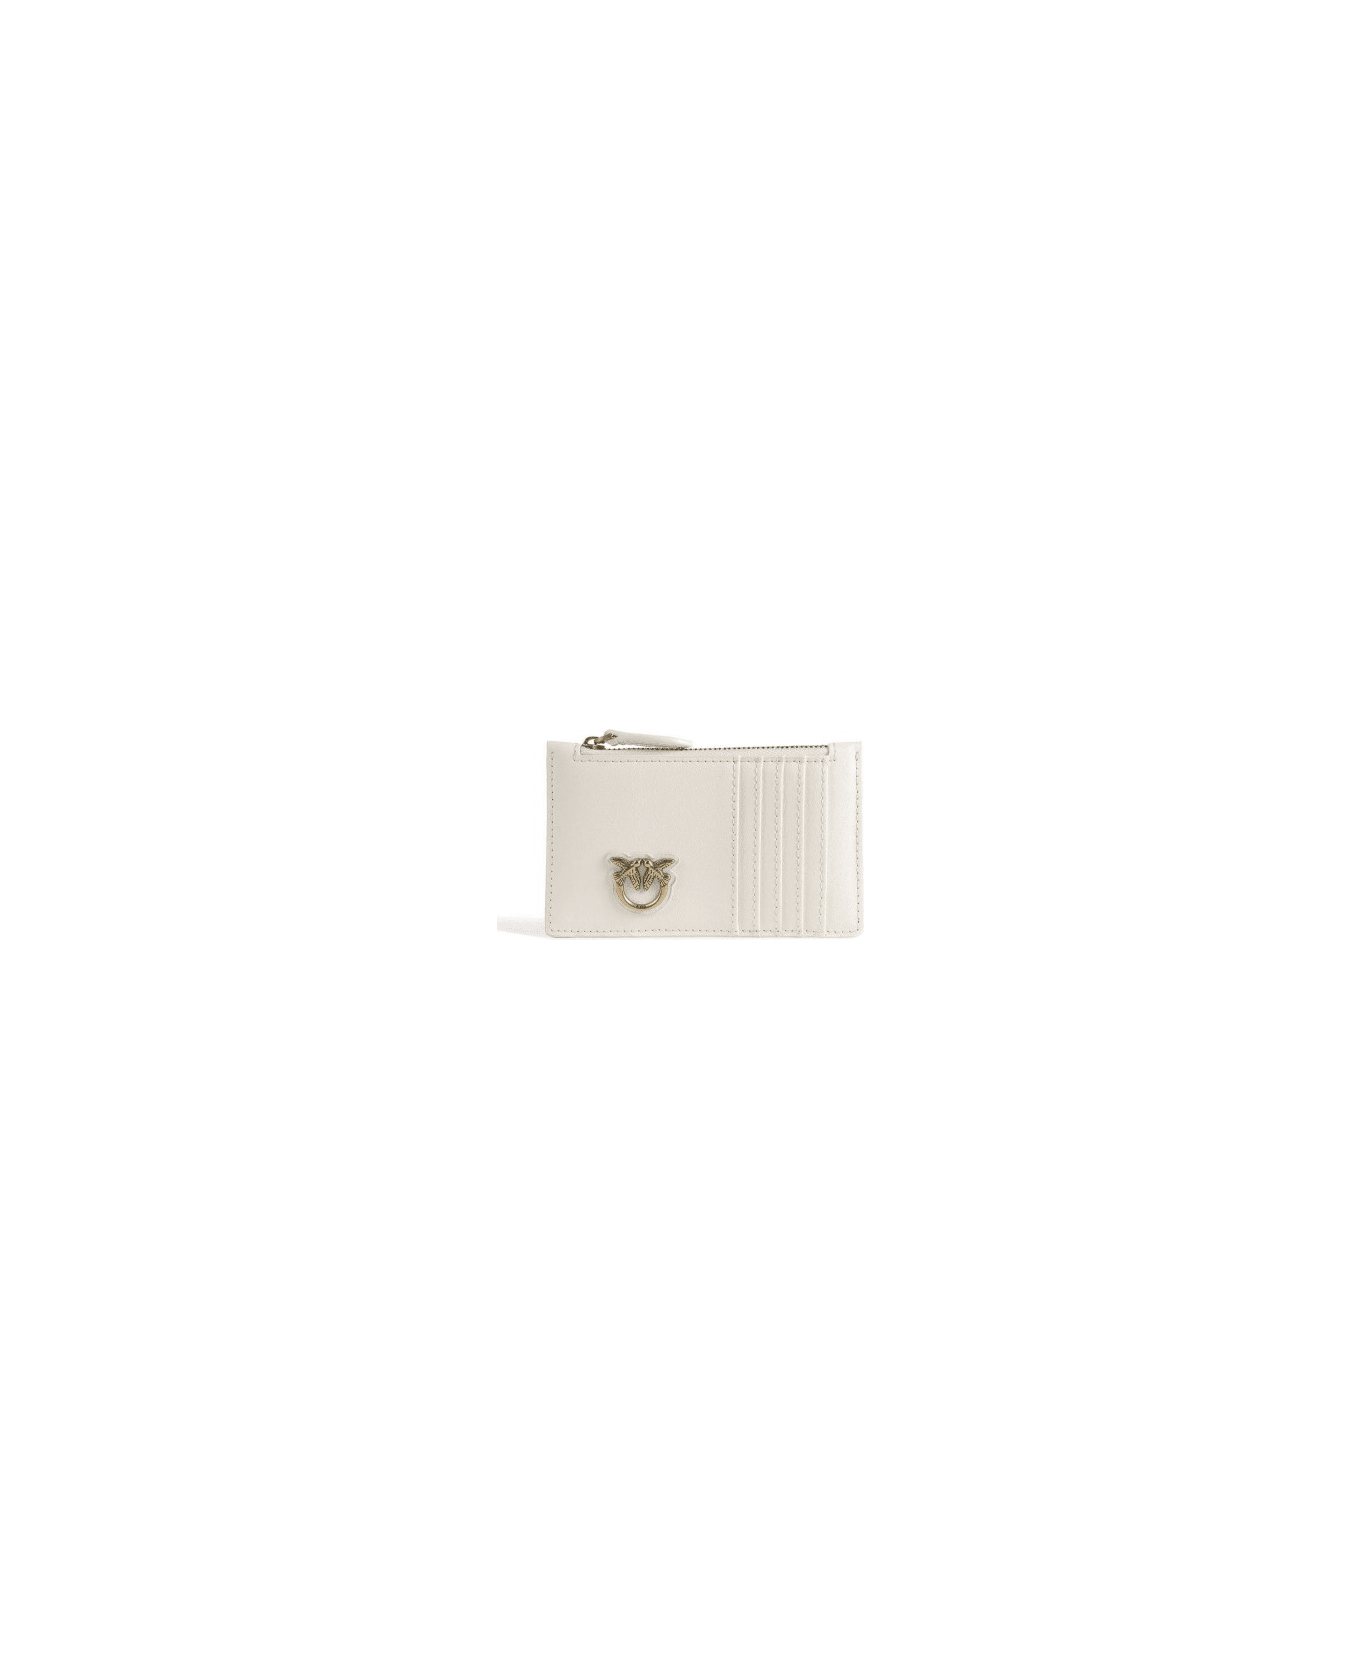 Pinko Card Holder - Crema 財布